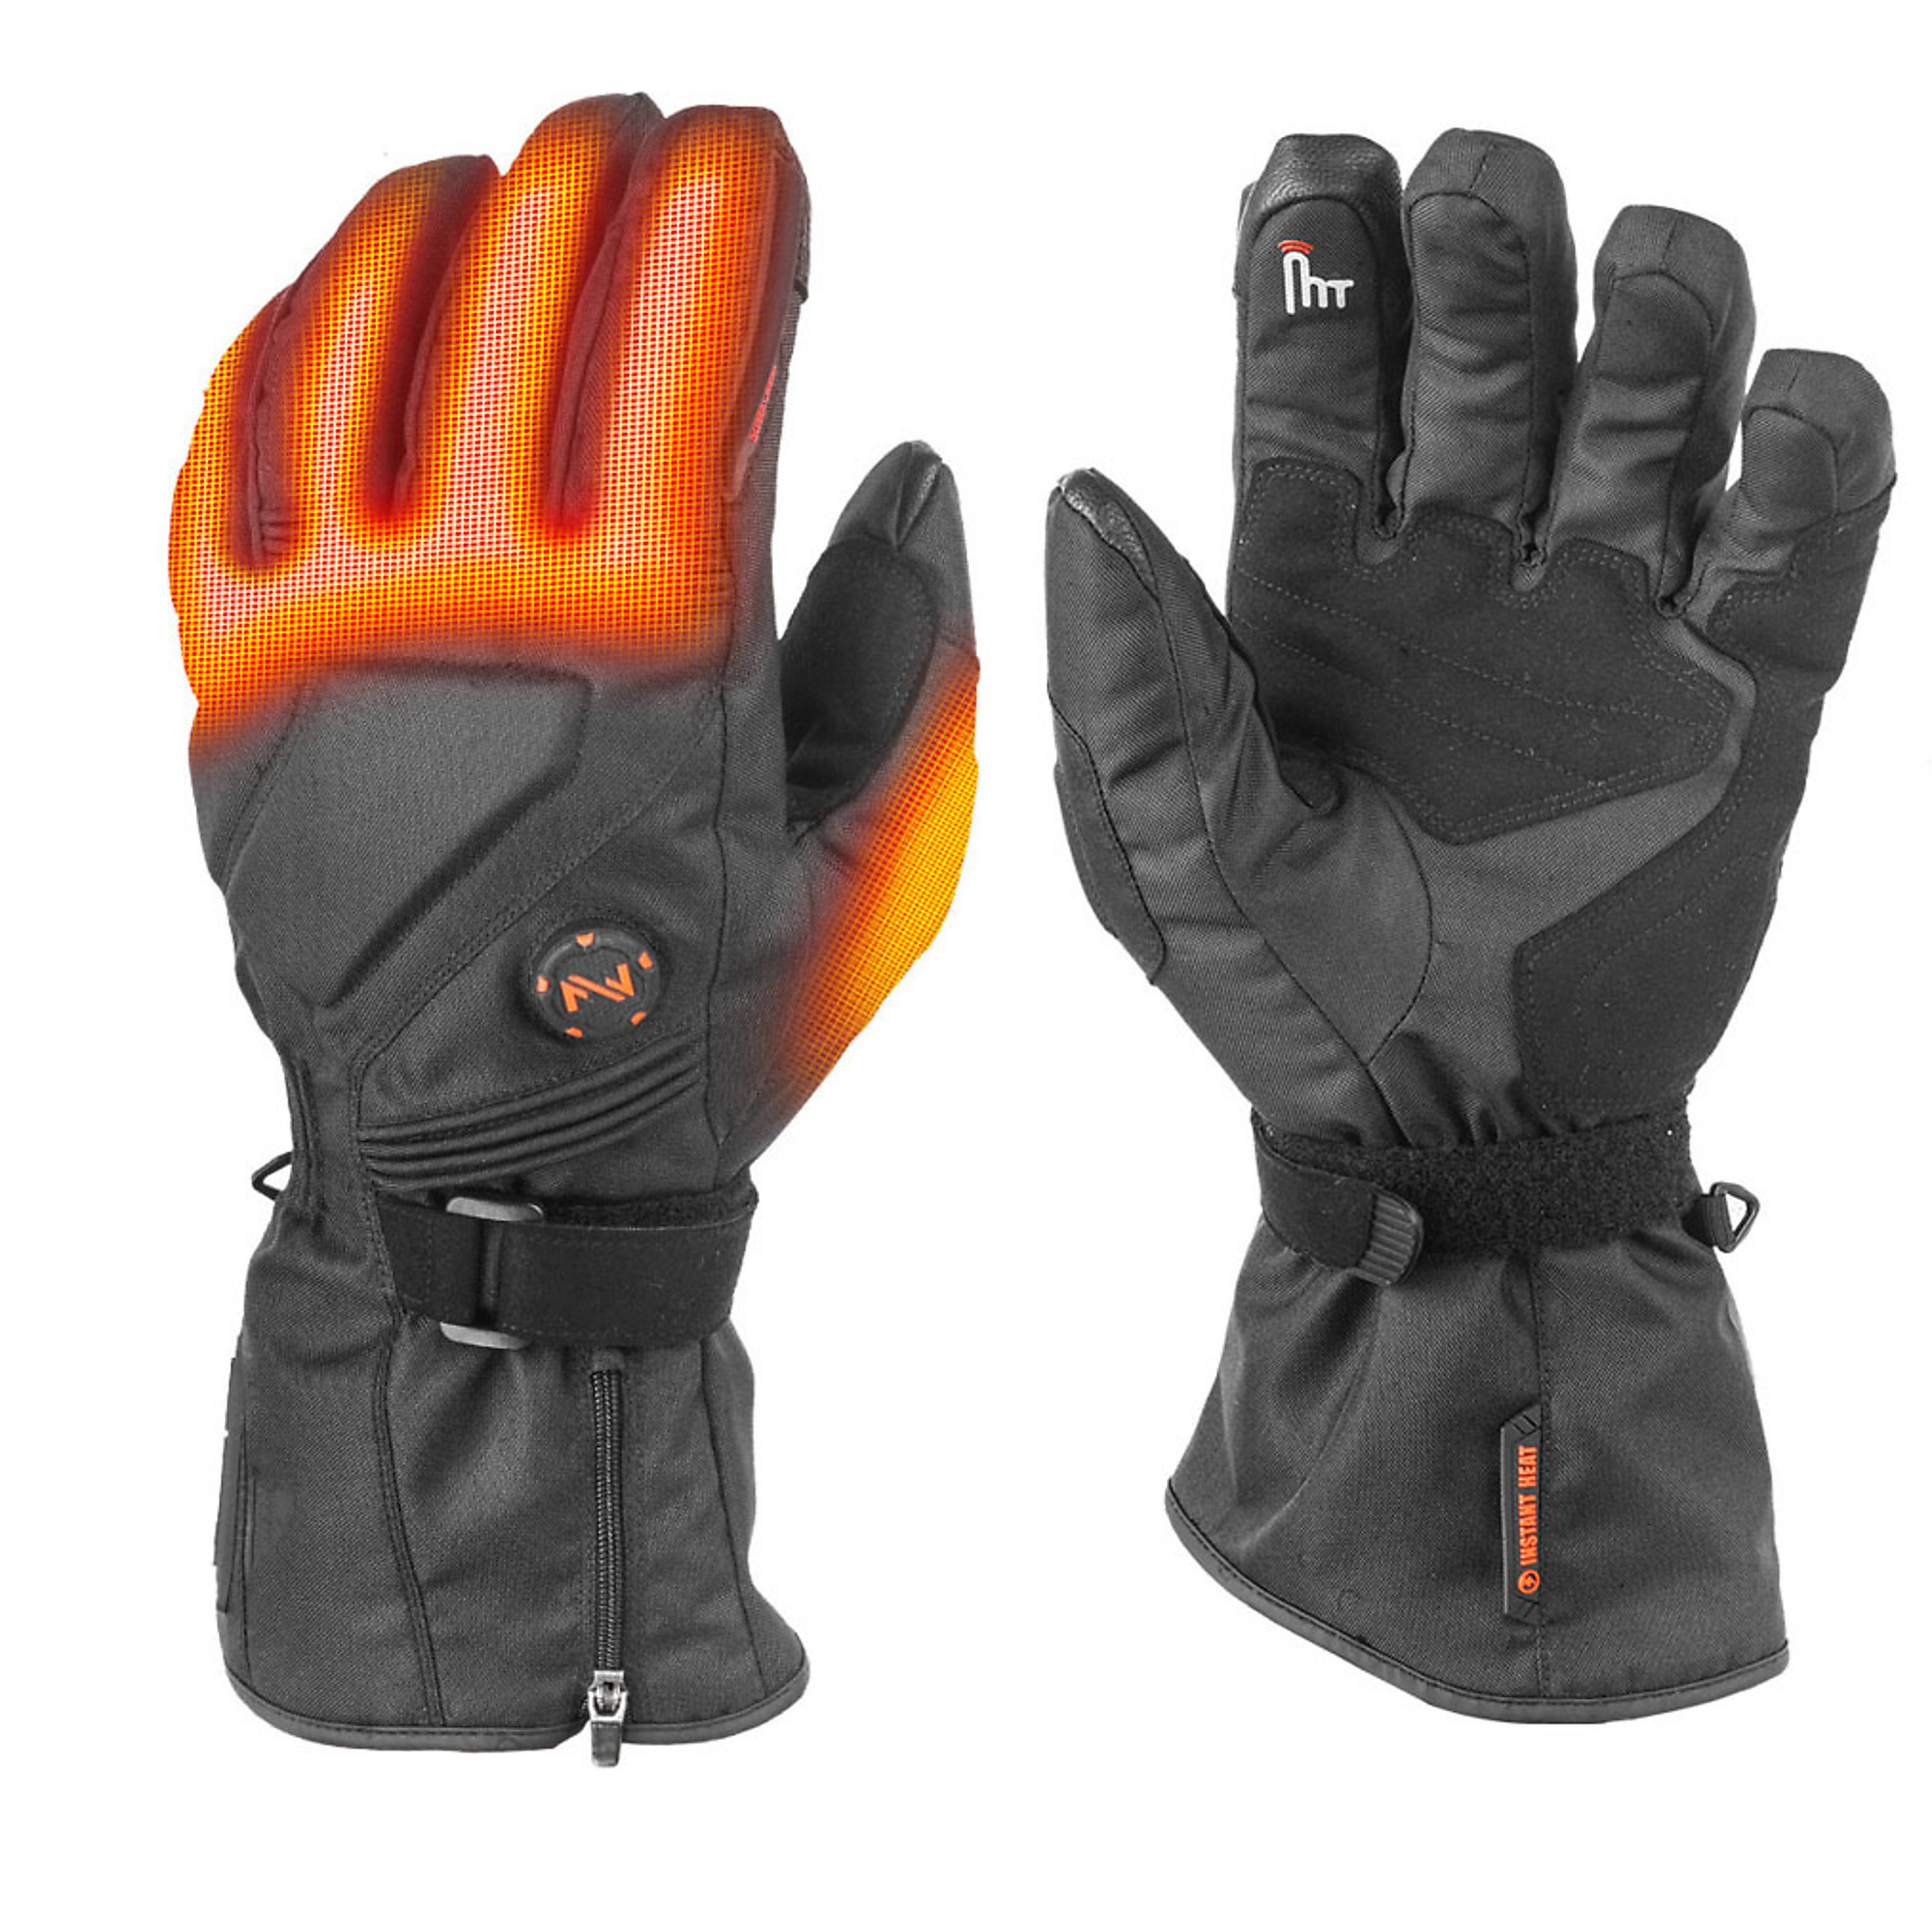 Fieldsheer, Storm Glove | Unisex | 7.4V | BLK | XS, Size XS, Color Black, Included (qty.) 2 Model MWUG03010120